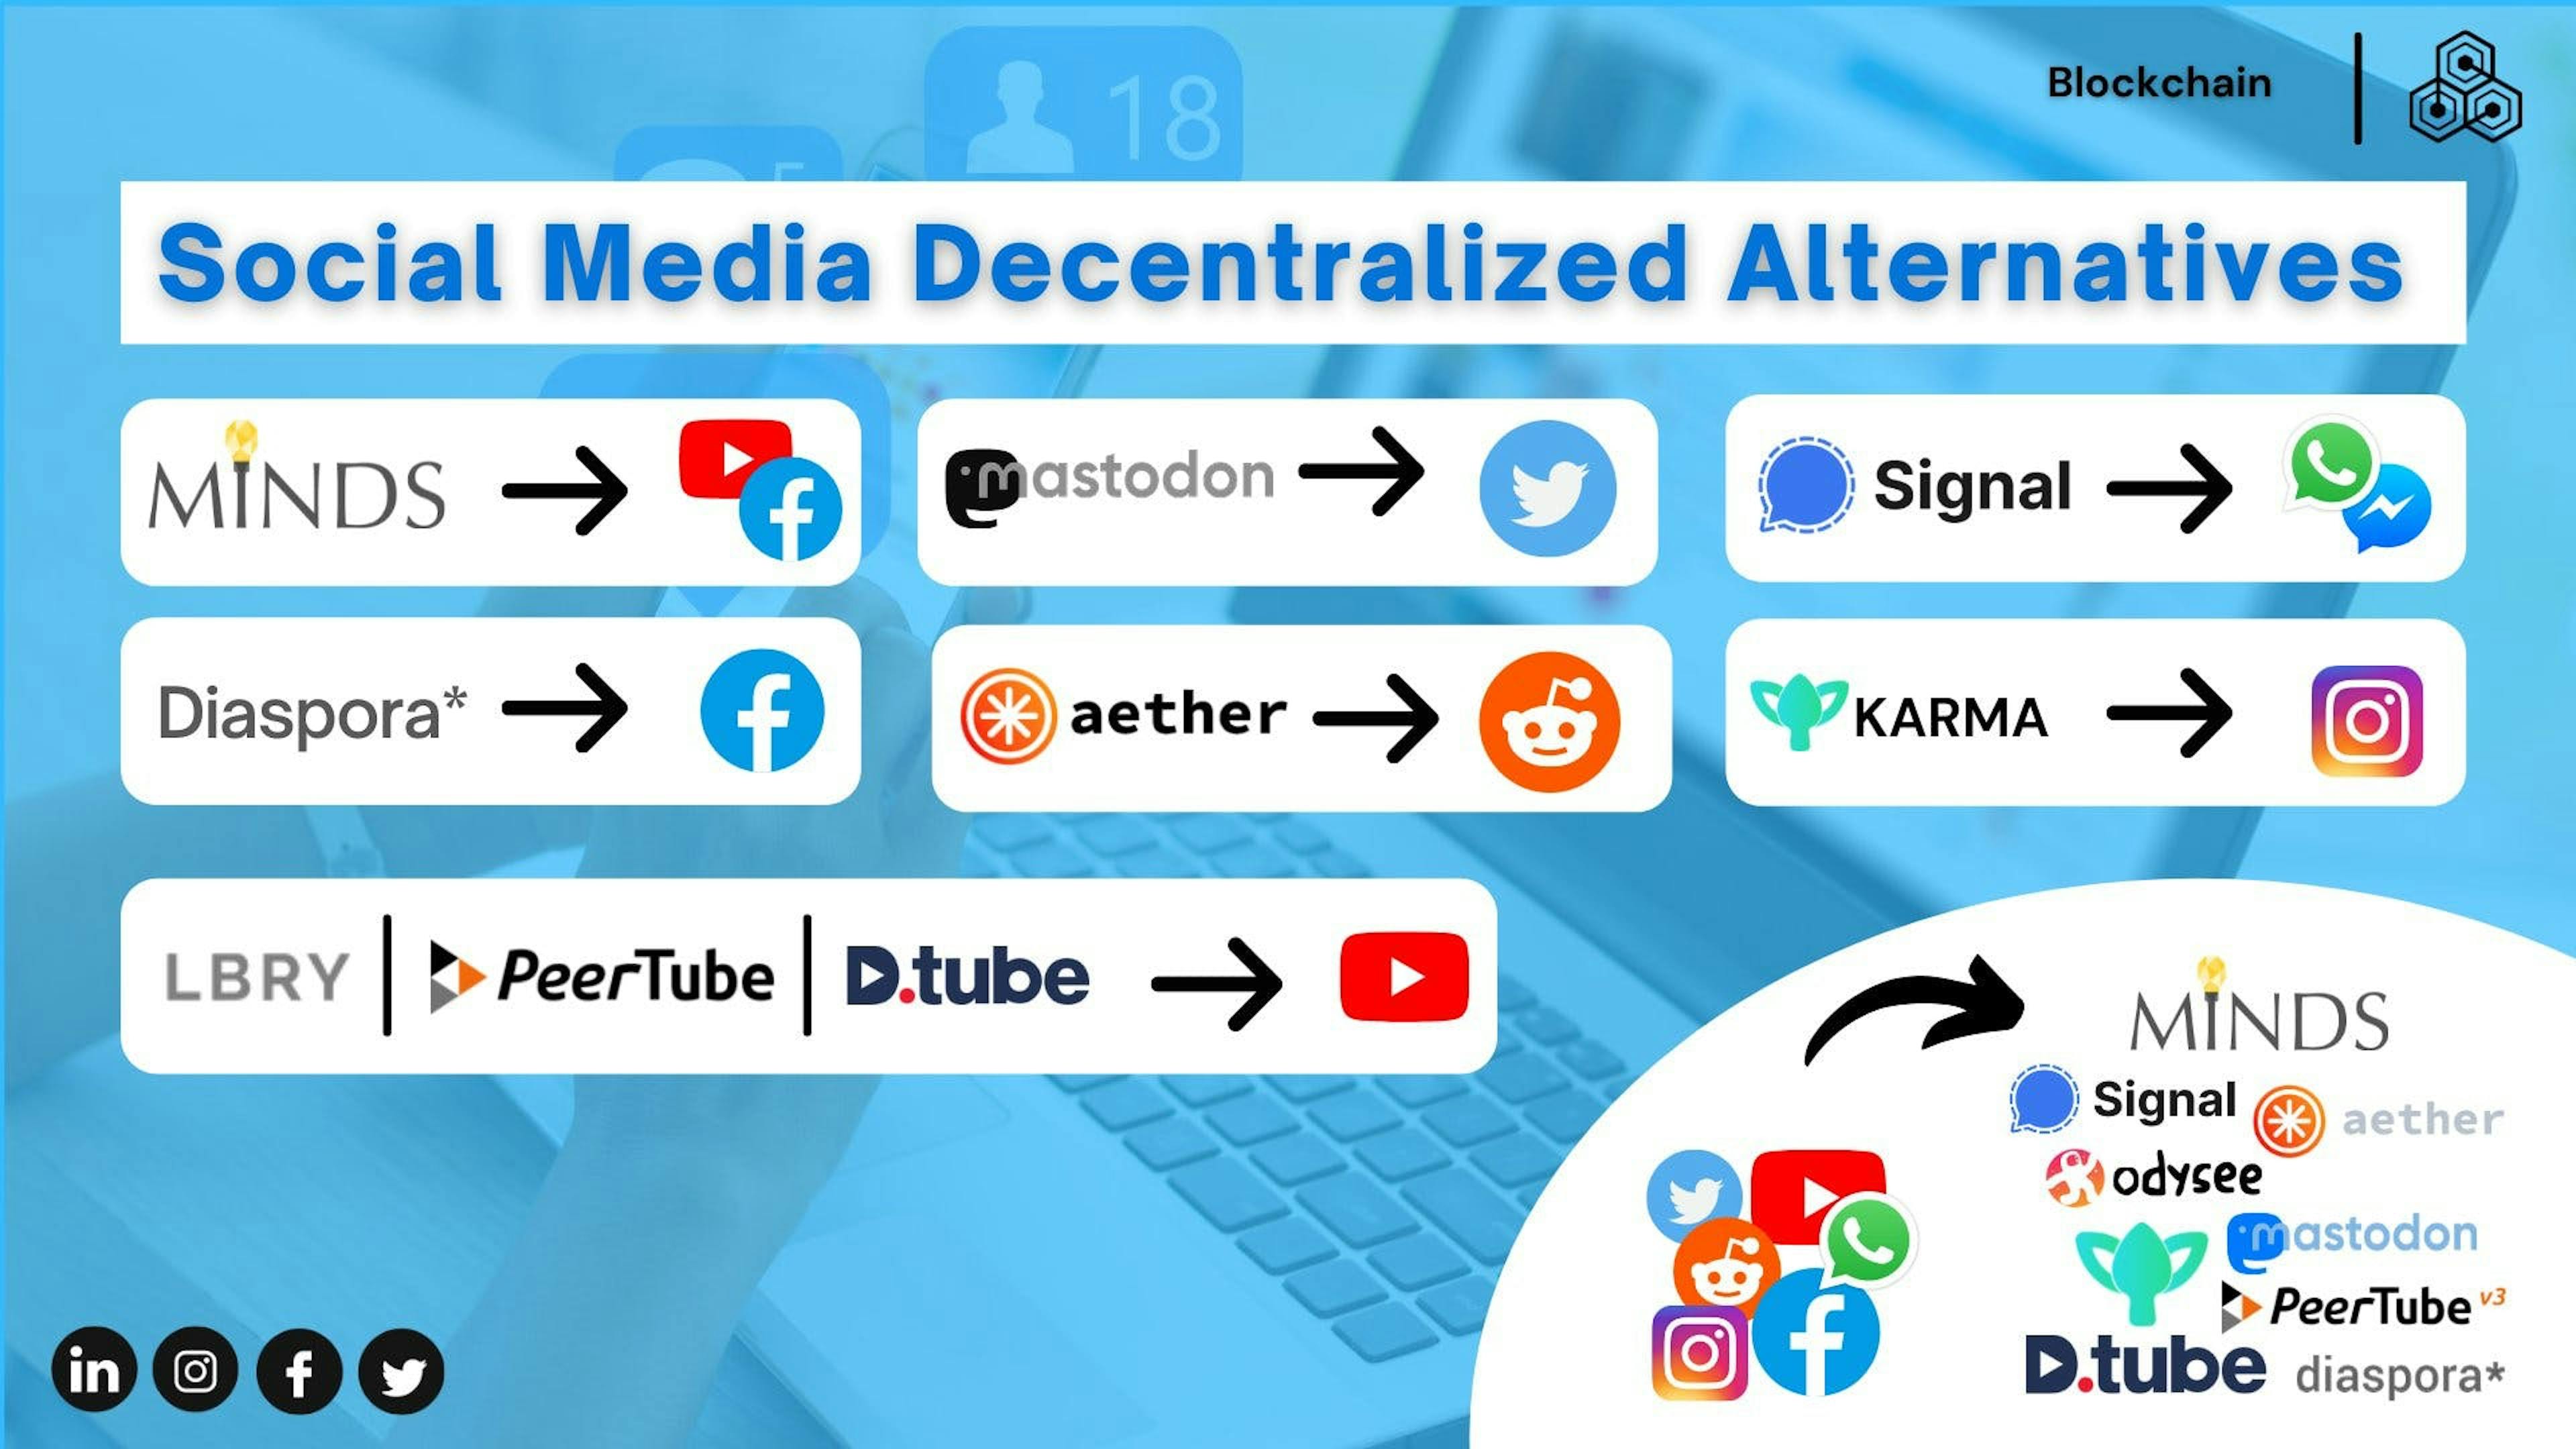 Some decentralized alternatives to popular social media apps. Source: Twitter.com